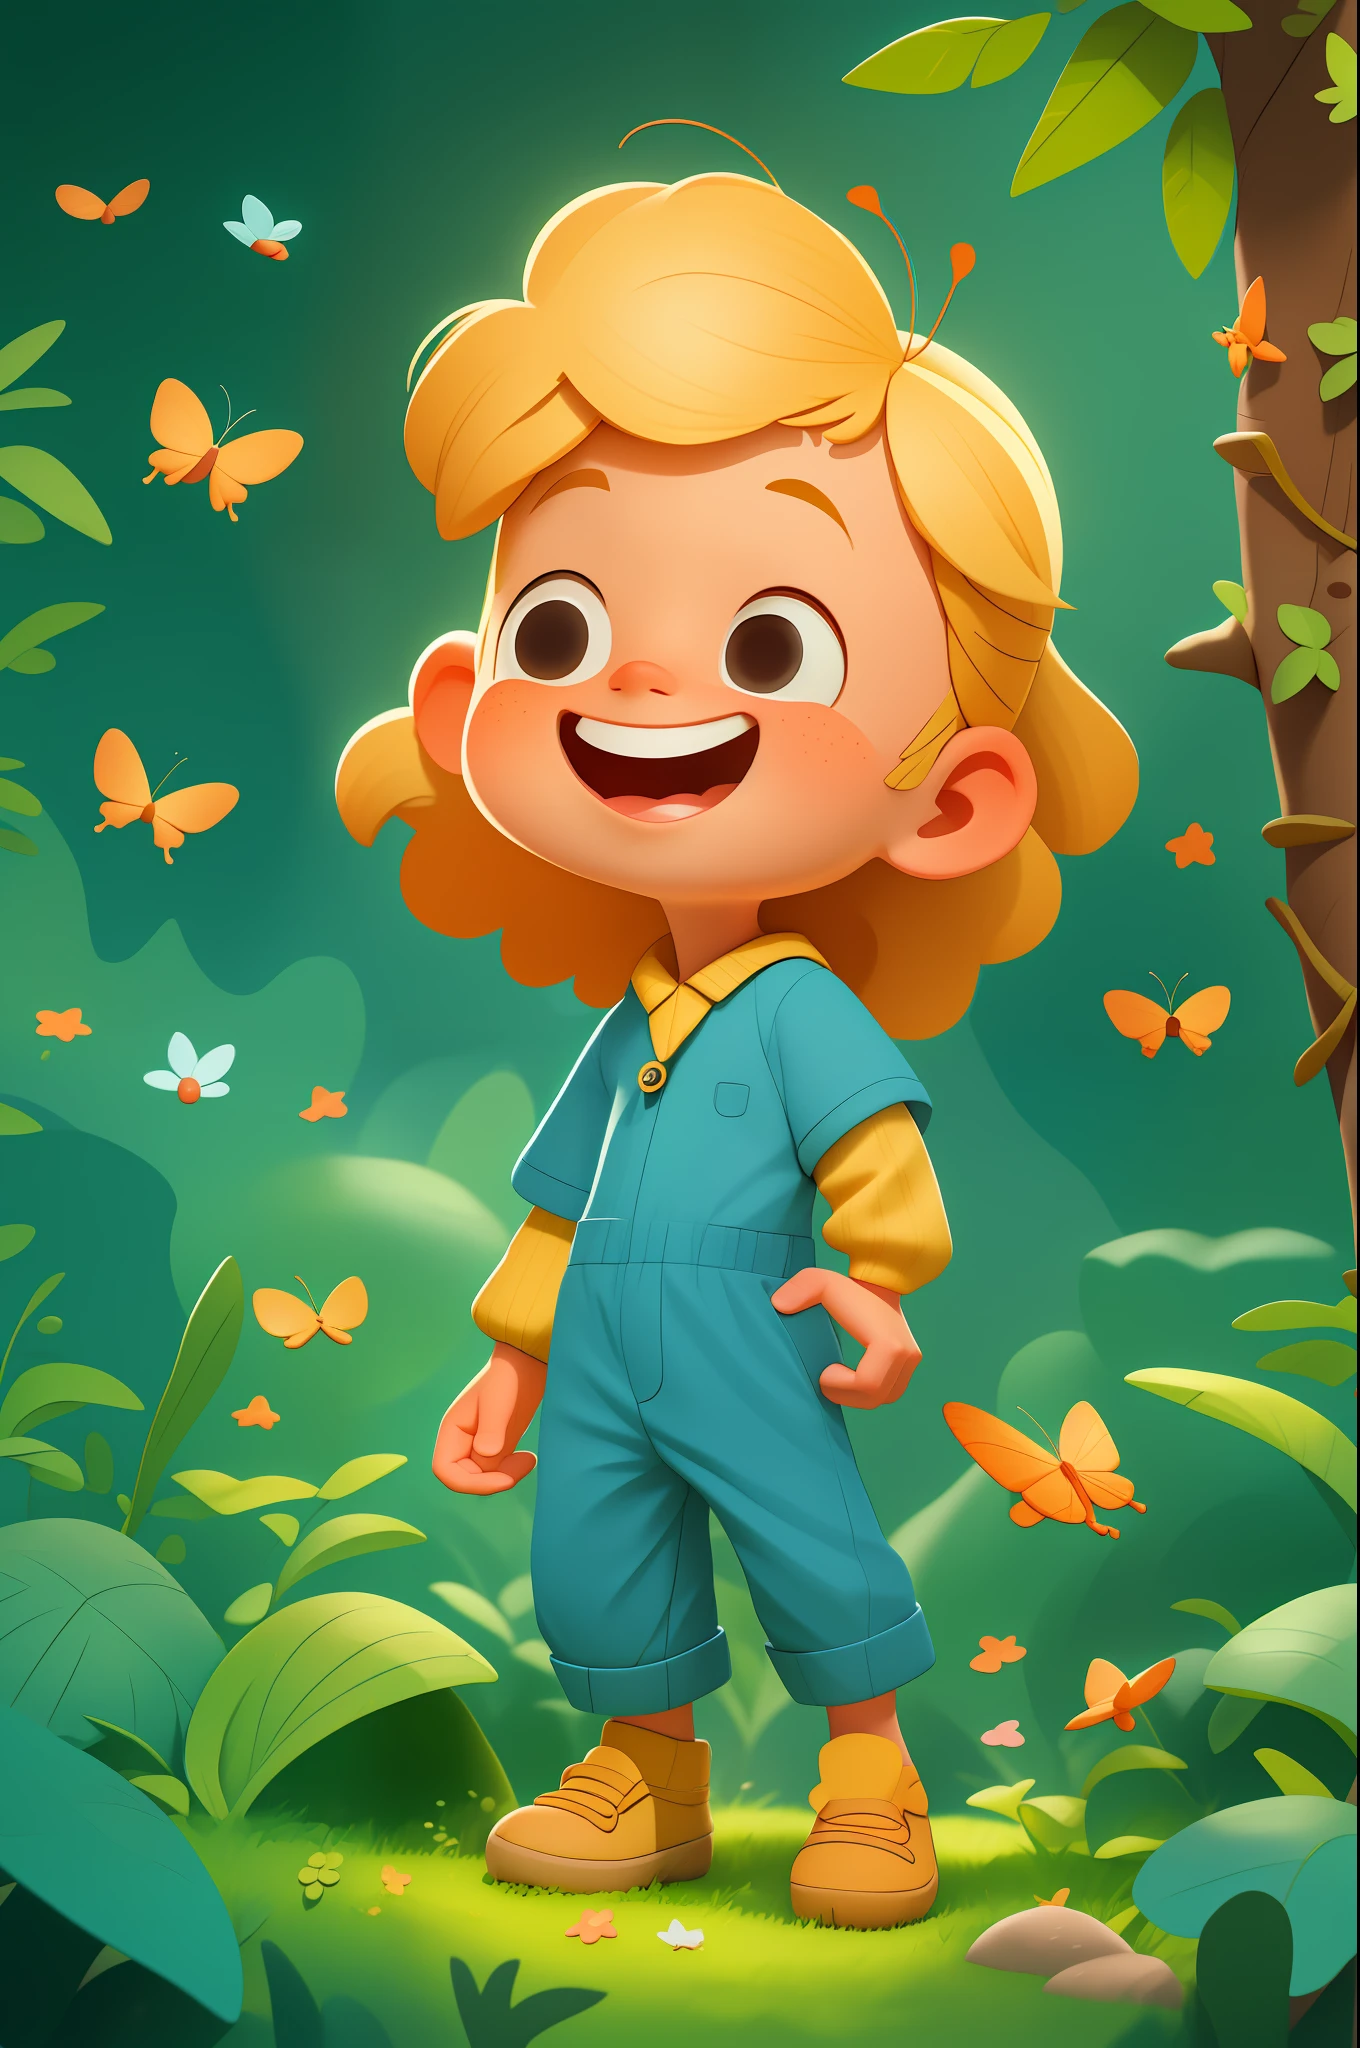 a happy cute 子供, 肖像画, 金髪, 青い宇宙服を着て, 蝶と遊ぶ, 屋外, 背景の森, 子供, トーン, ピクサースタイル, 3D, carトーン, 詳細な顔, 非対称, 上半身